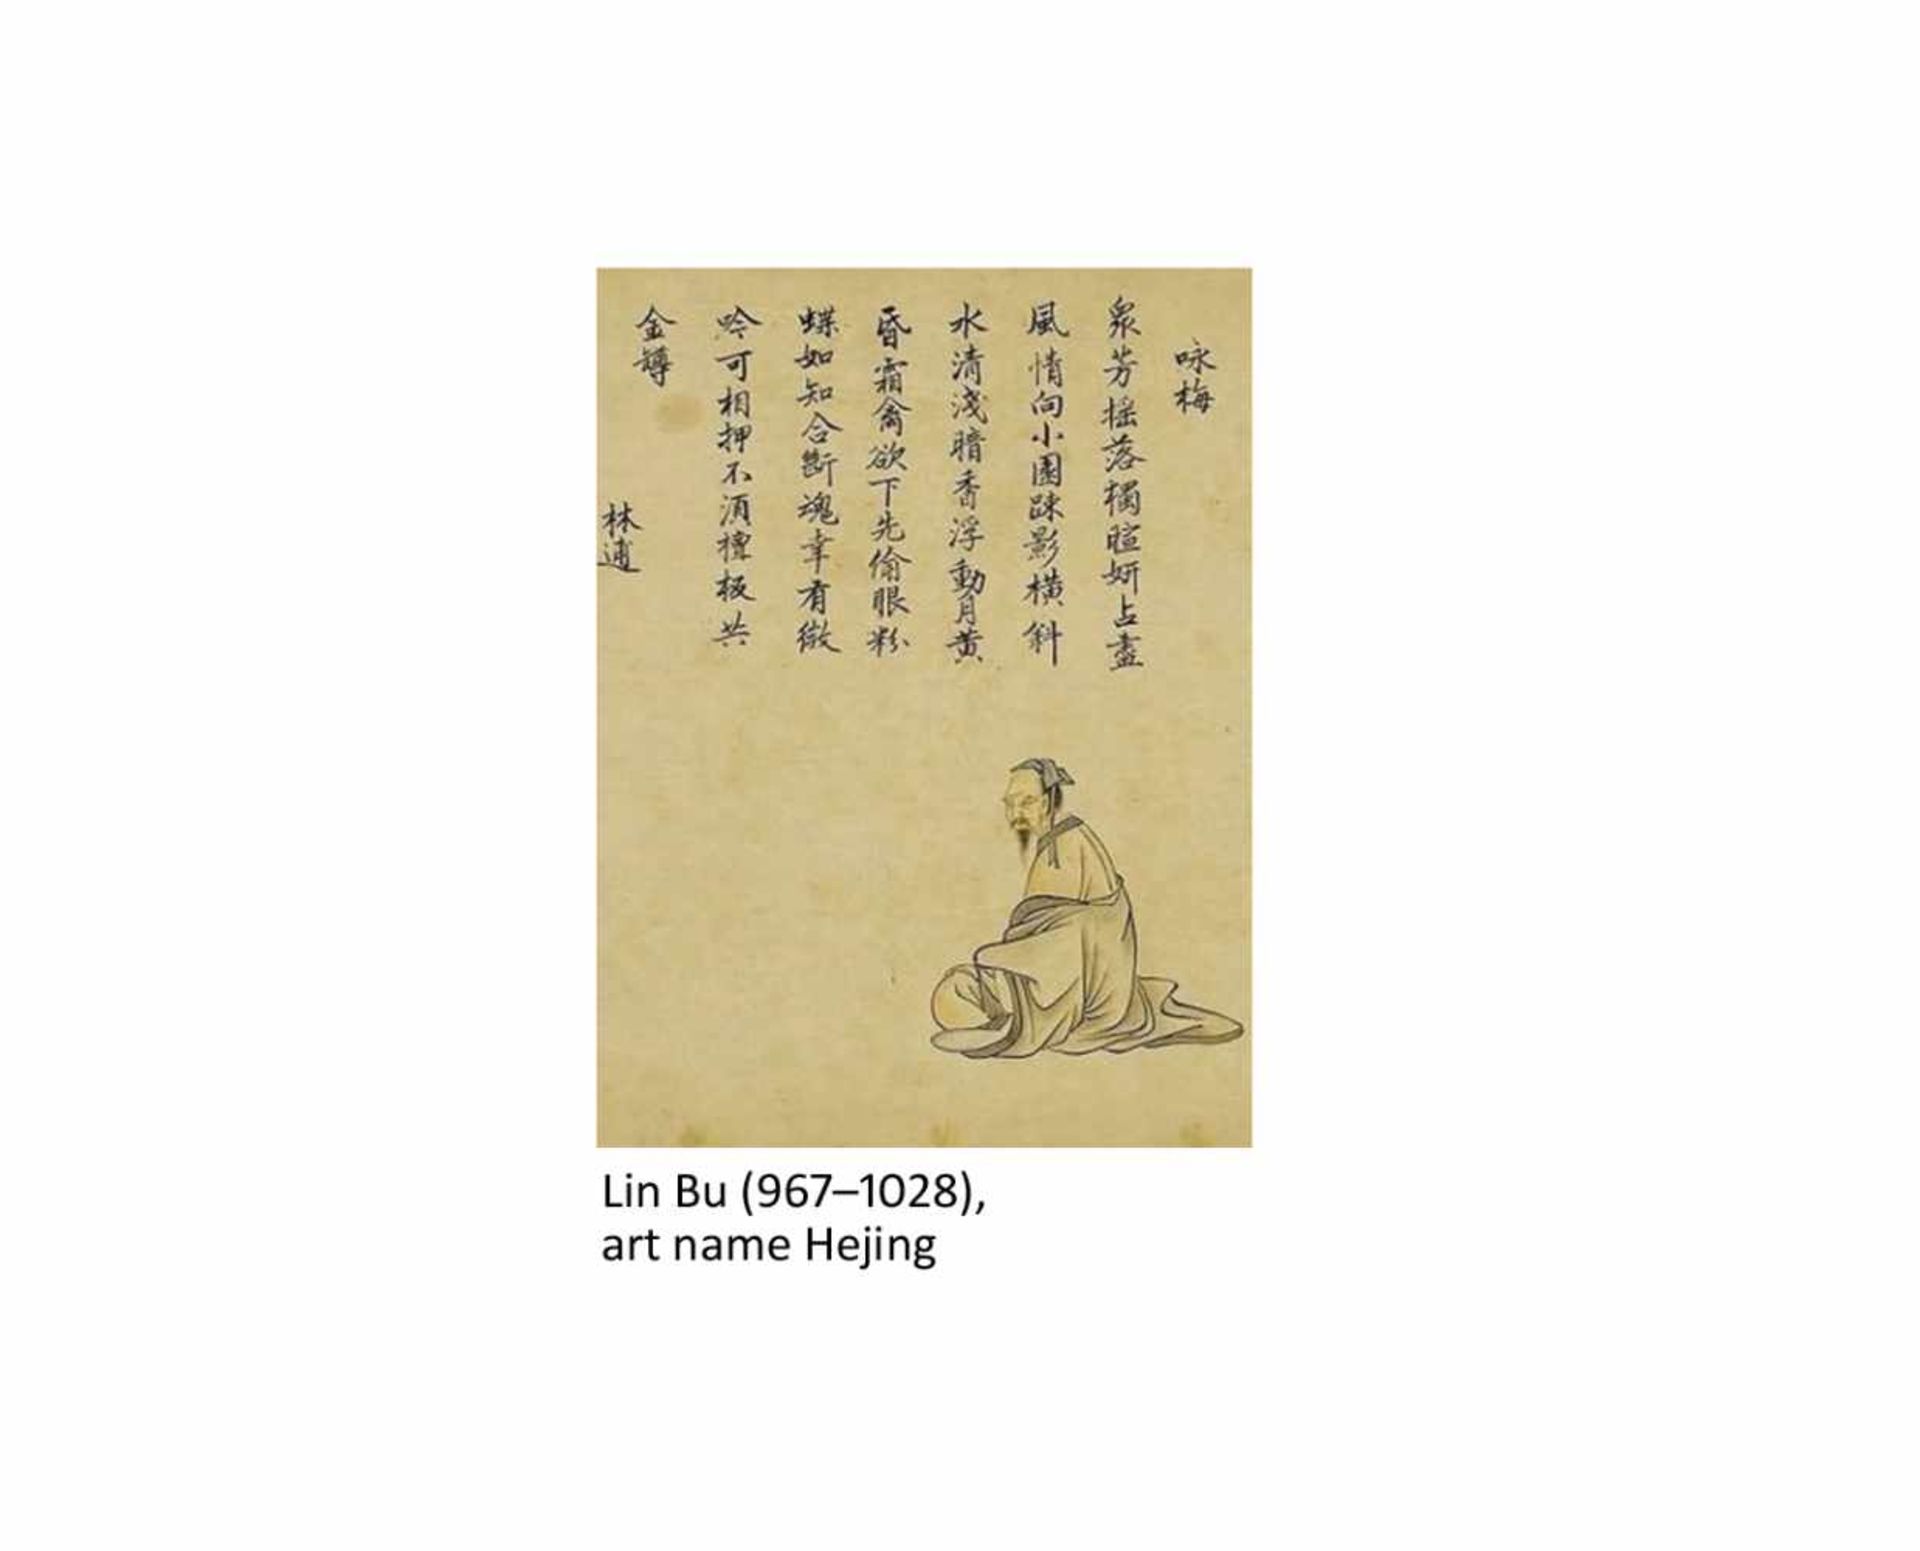 A PORCELAIN PLAQUE BY WANG QI, 1932China, signed Taomi sanren Wang Qi and dated 1932. Seal Tao Zhai. - Image 5 of 8